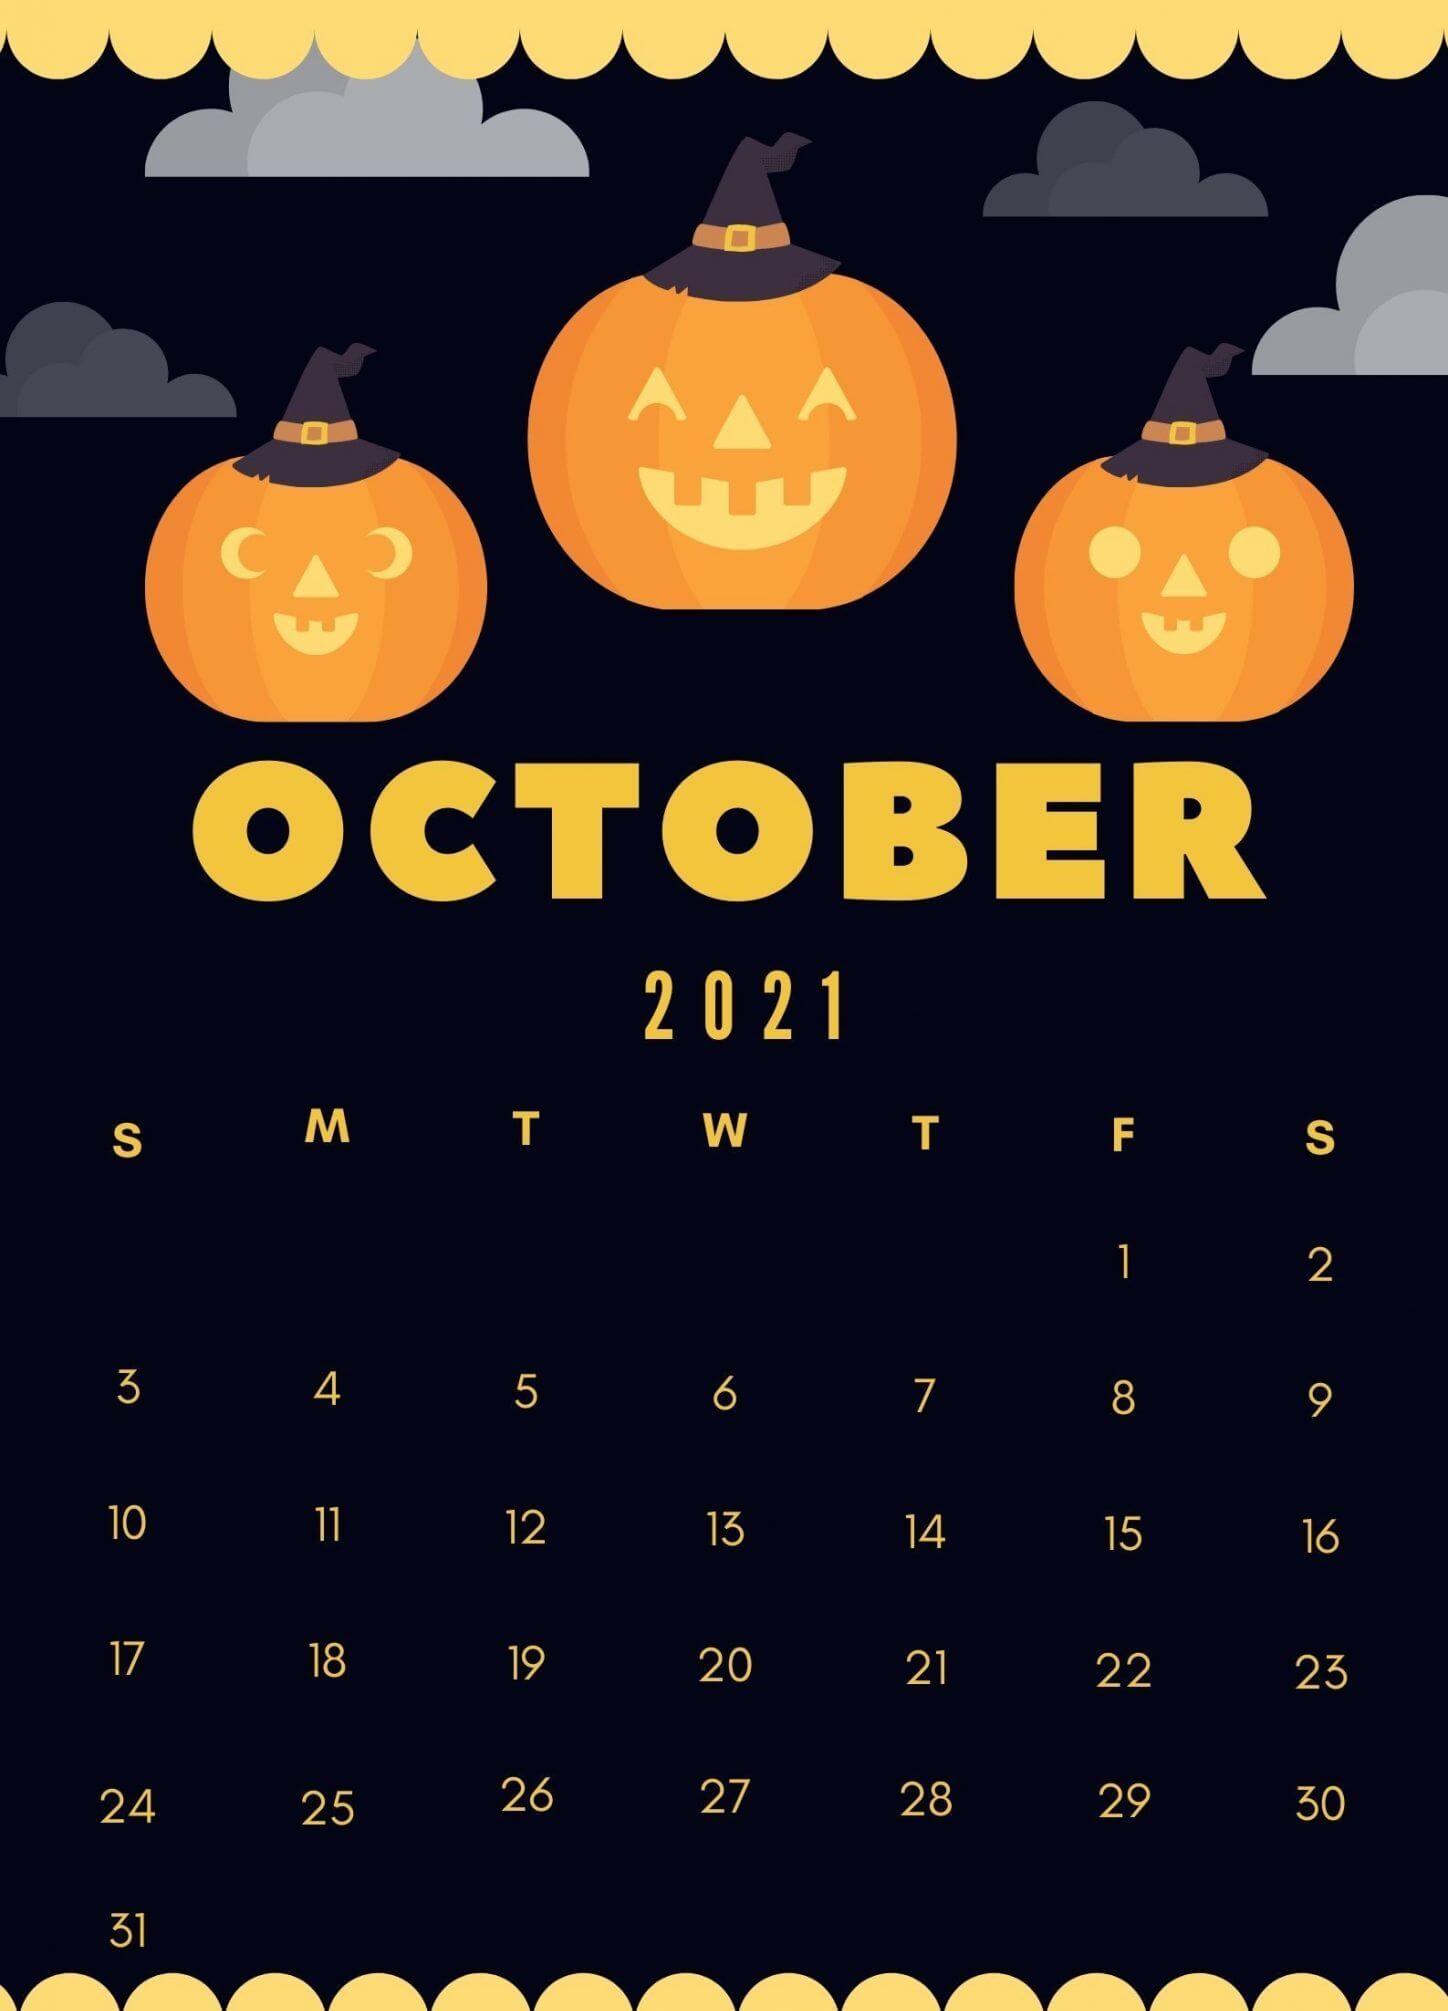 October 2021 iPhone Calendar Wallpaper